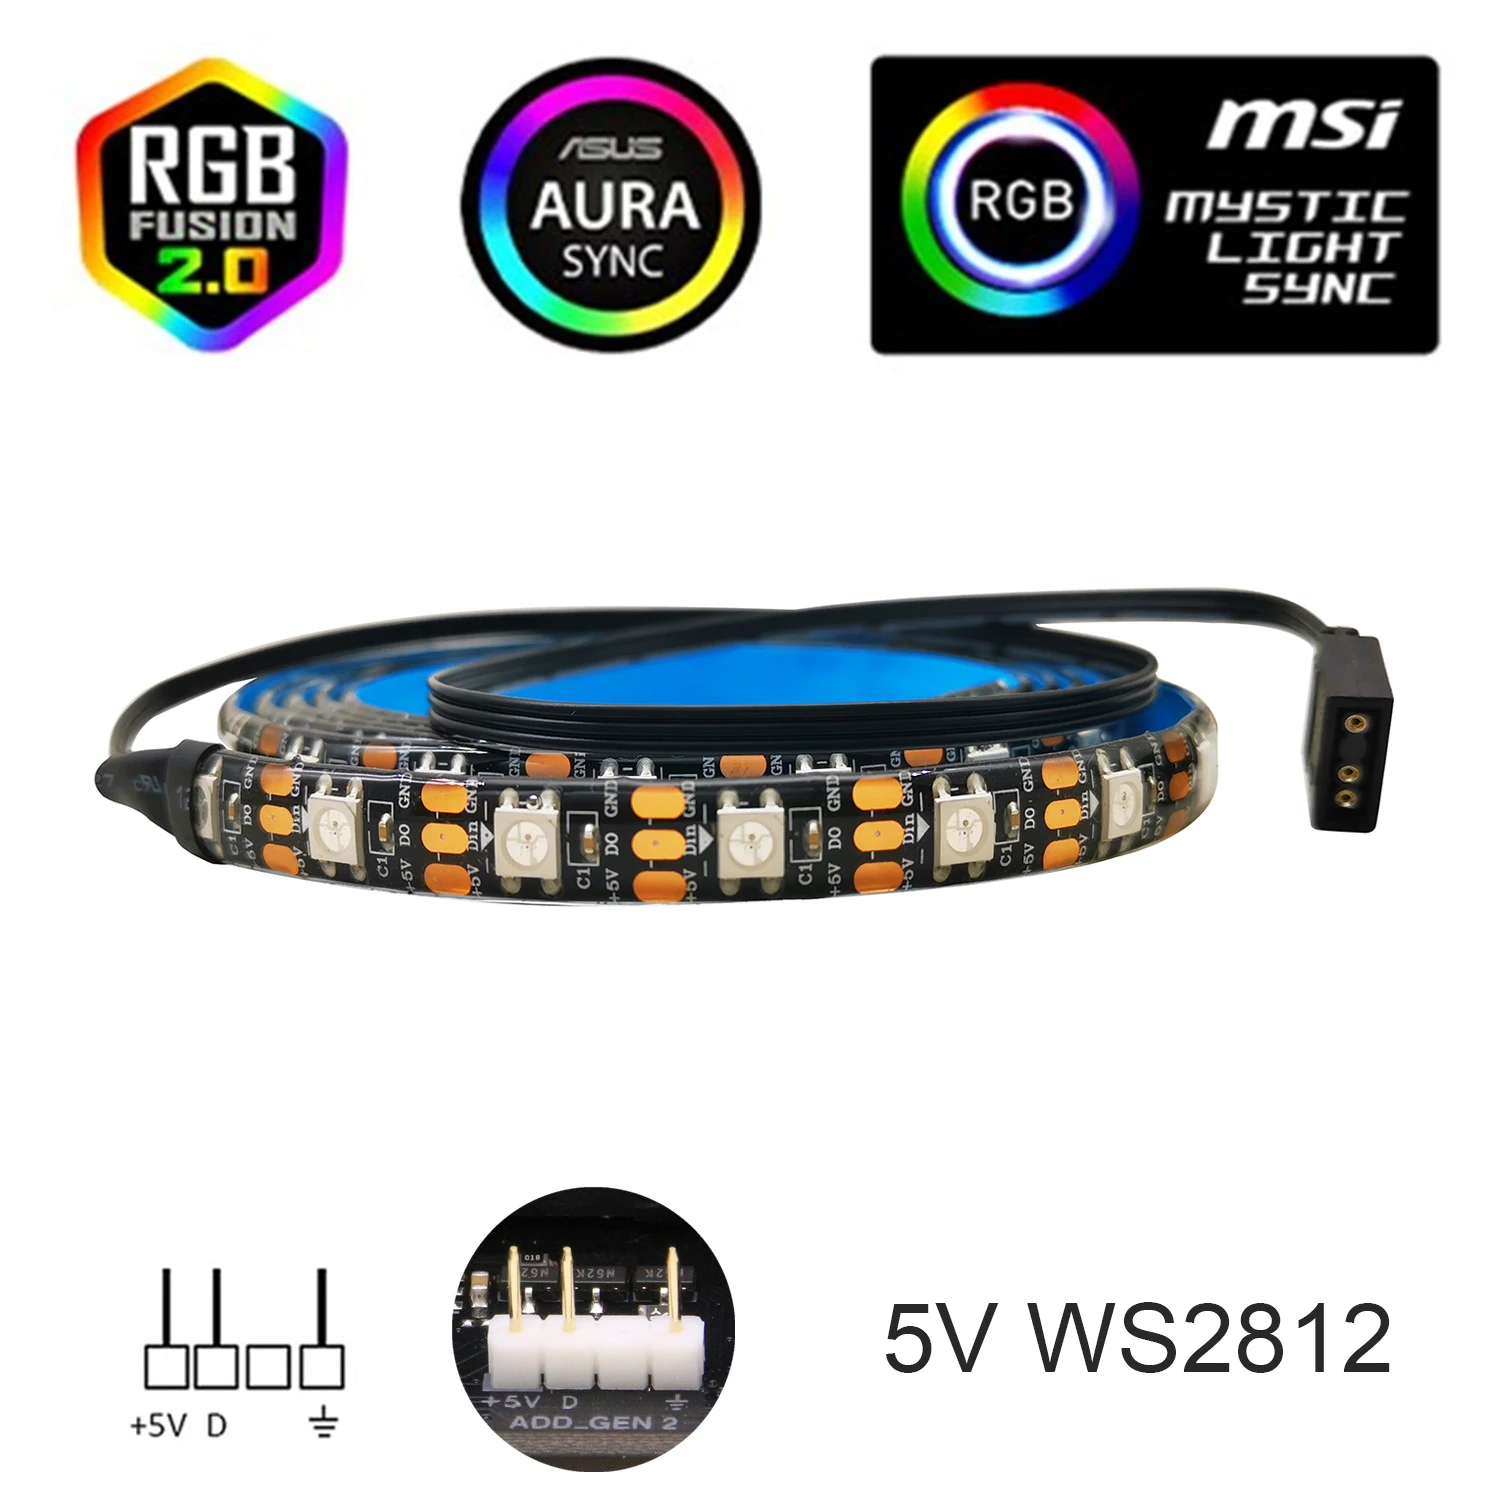 

ARGB LED Strip WS2812b 60 Led/m 5V Addressable Rainbow LED light 3PIN for ASUS AURA SYNC / MSI Mystic Light Sync / GIGABYTE